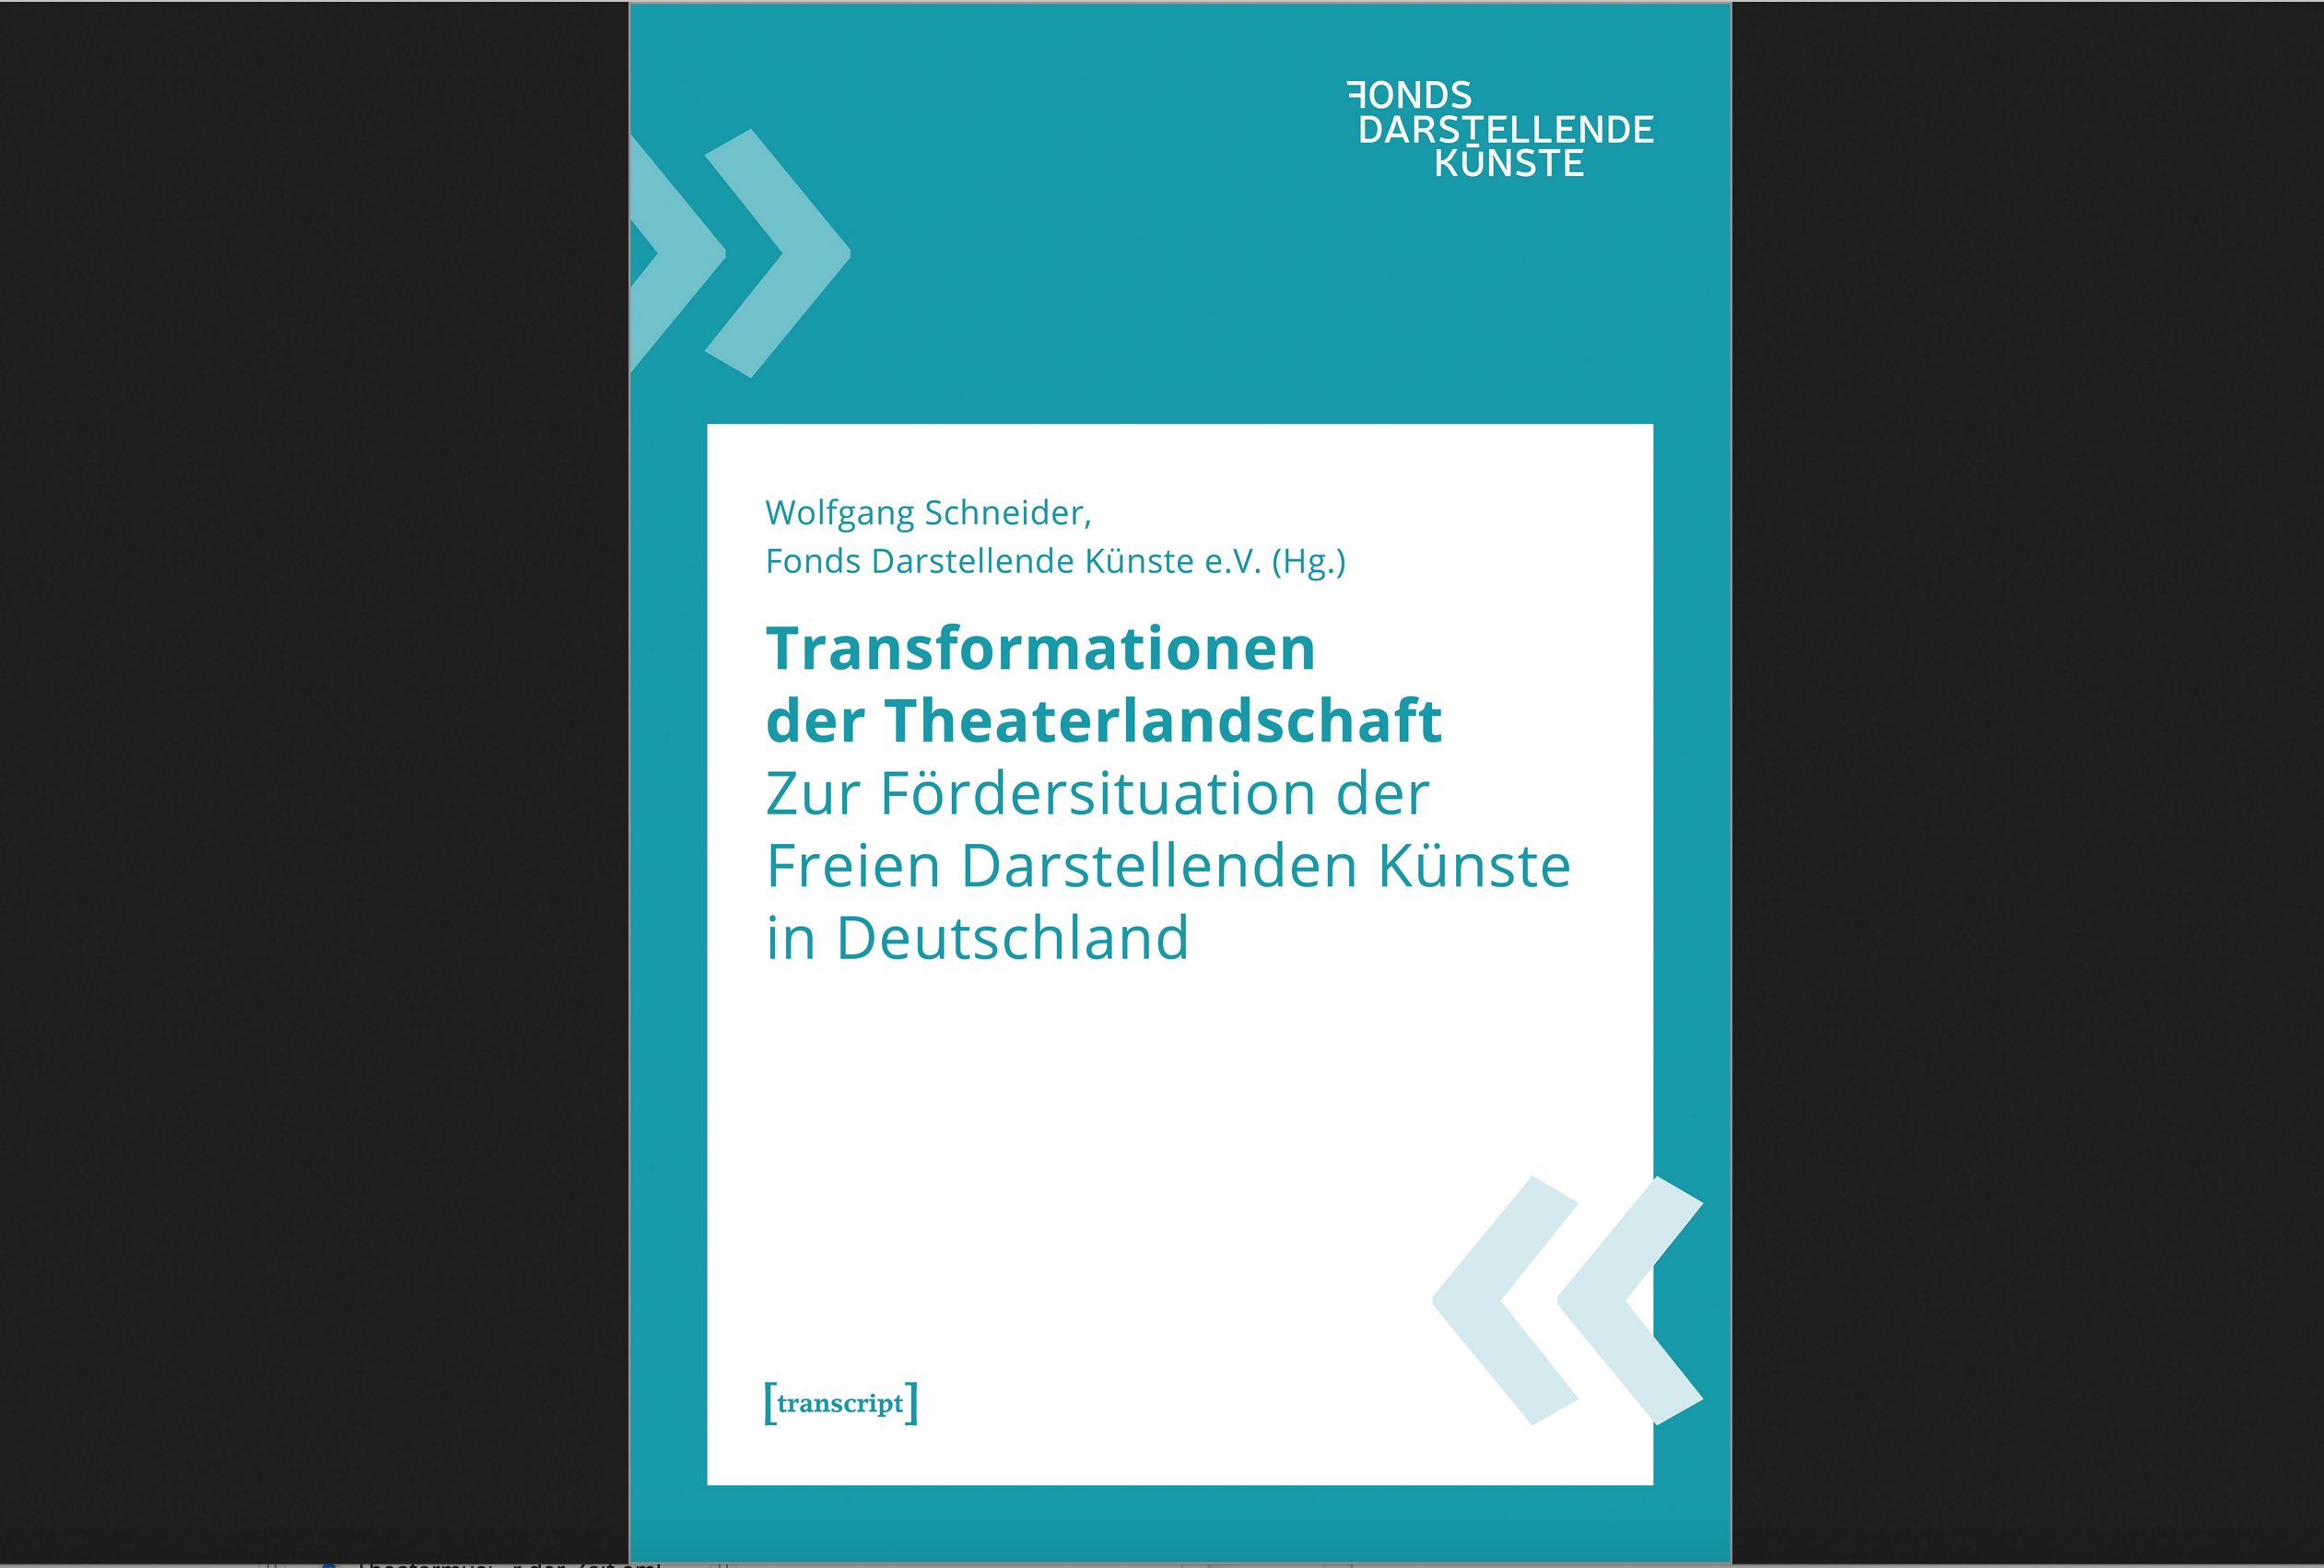 Wolfgang Schneider/ Fonds Darstellende Künste e.V.: Transformationen der Theaterlandschaft, transcript verlag